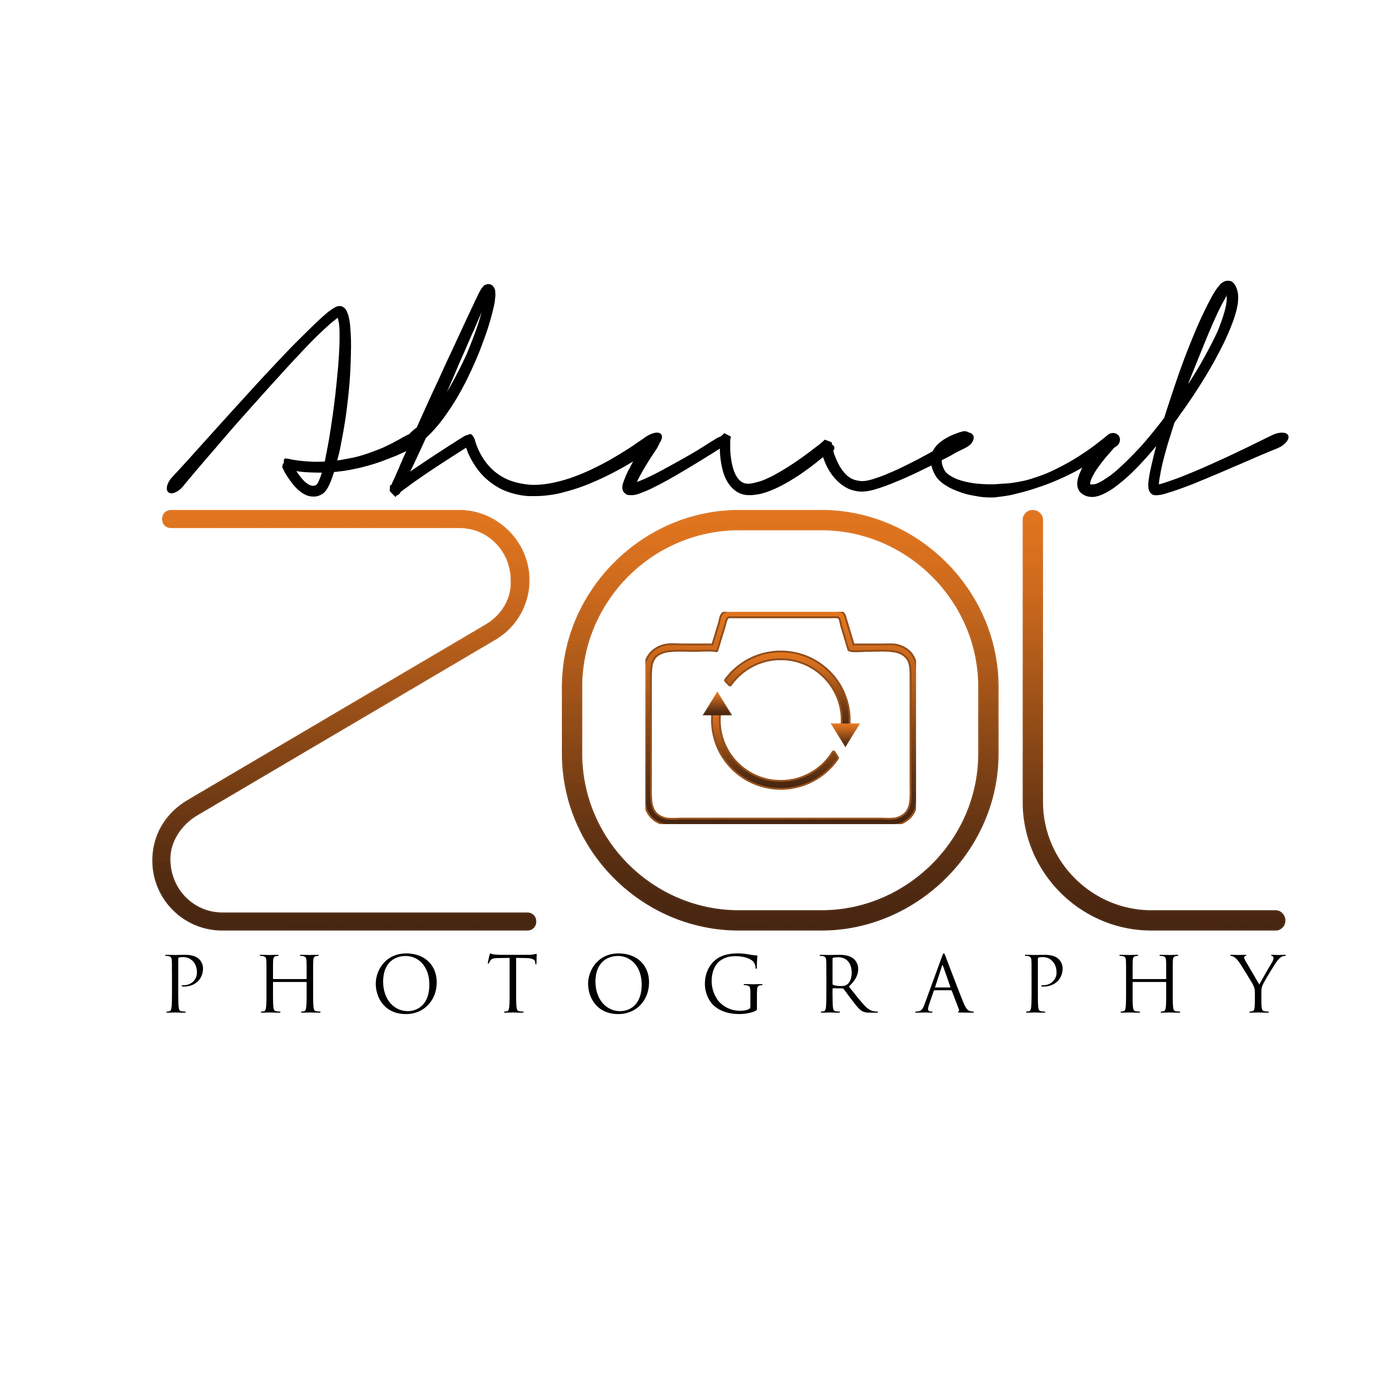 Zol Logo - Ahmad Zol Photography